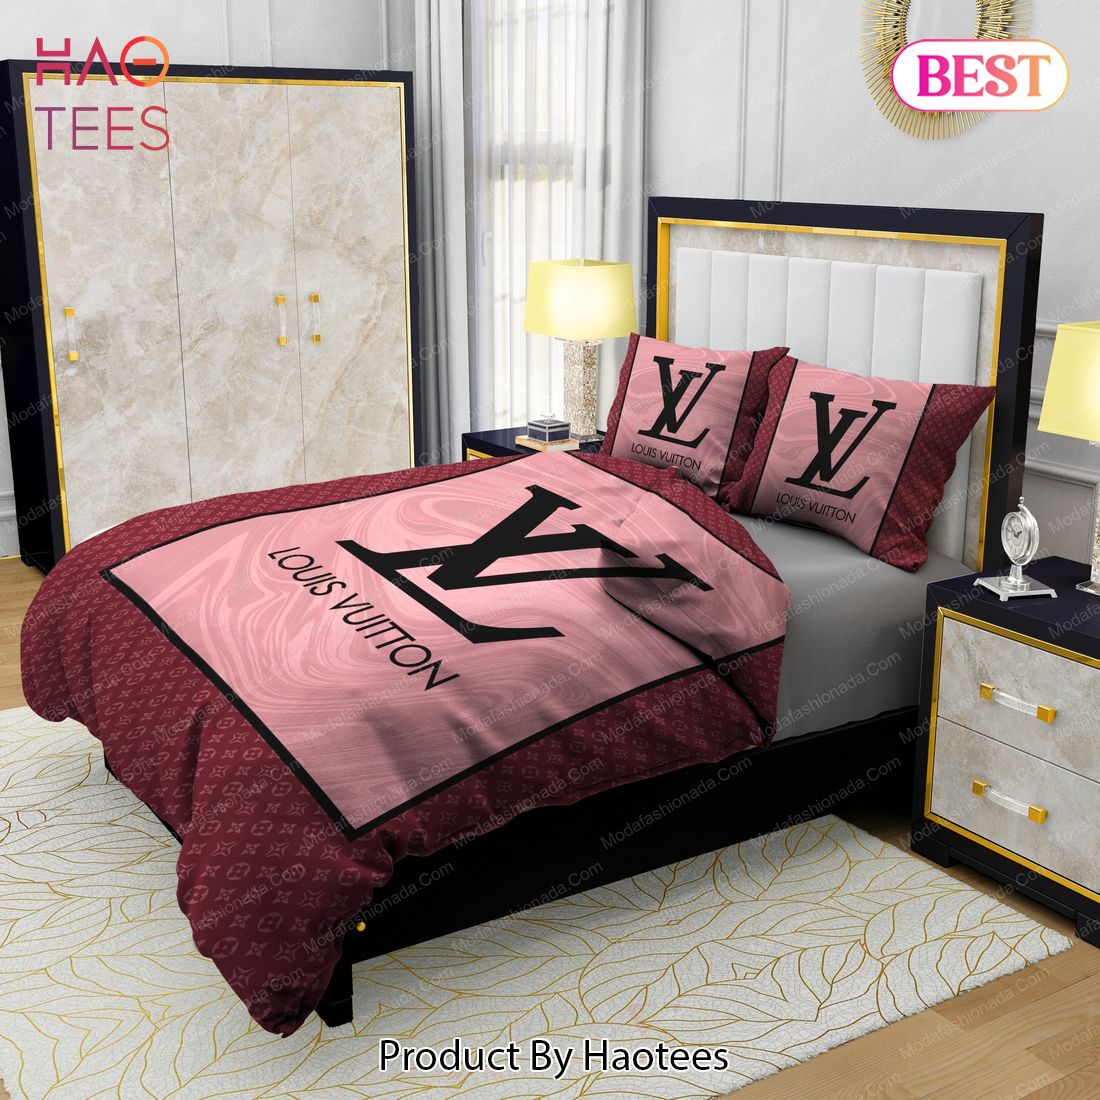 Black Veinstone Bedroom Duvet Cover Louis Vuitton Bedding Set